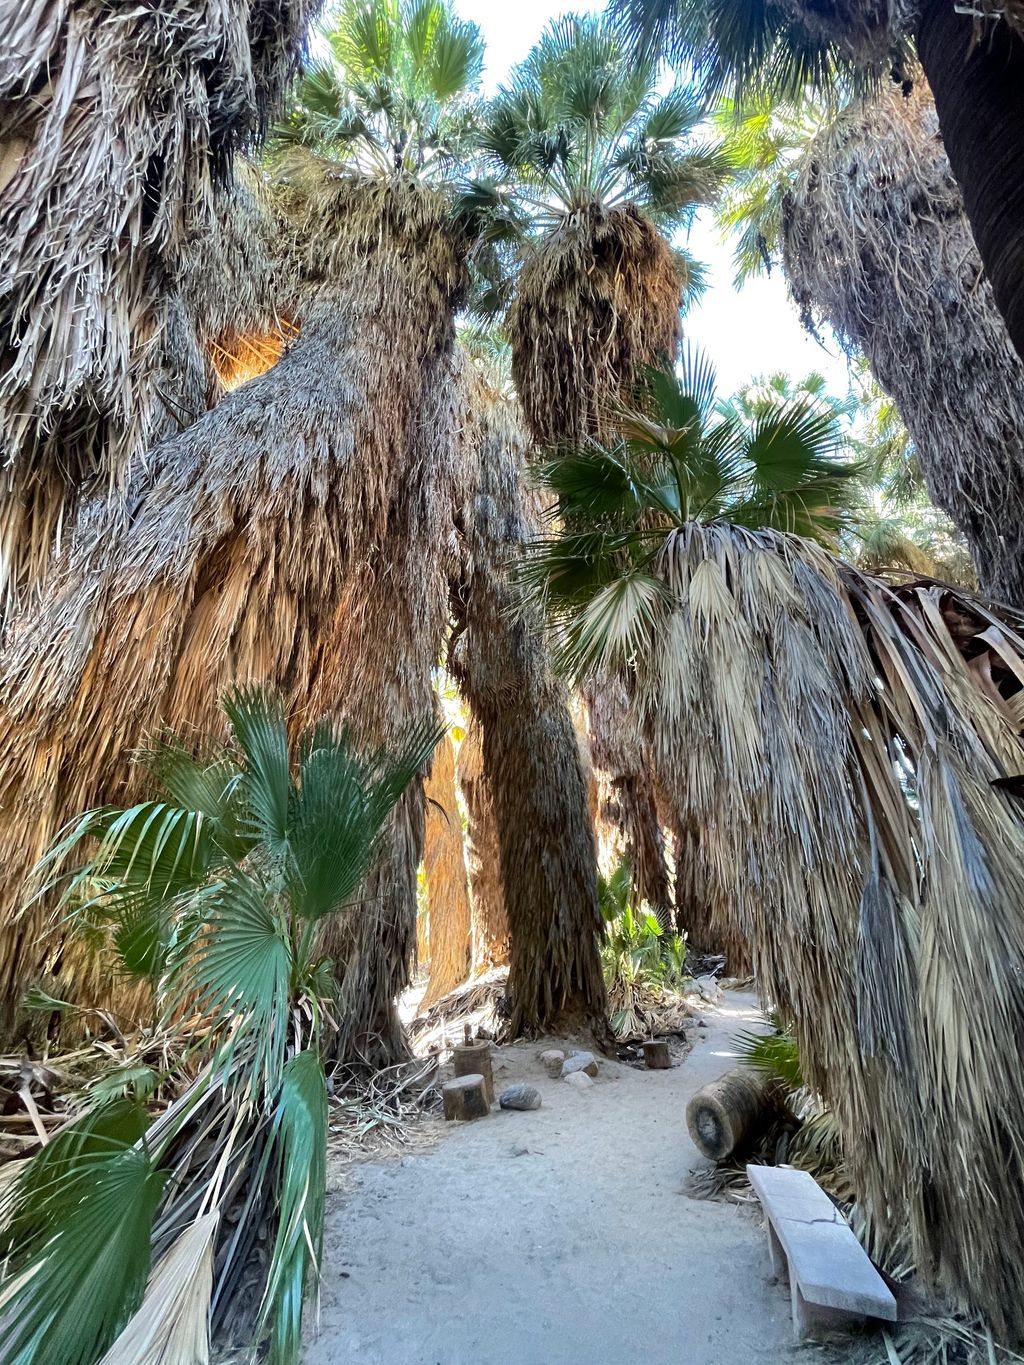 Thousand Palms Oasis Preserve